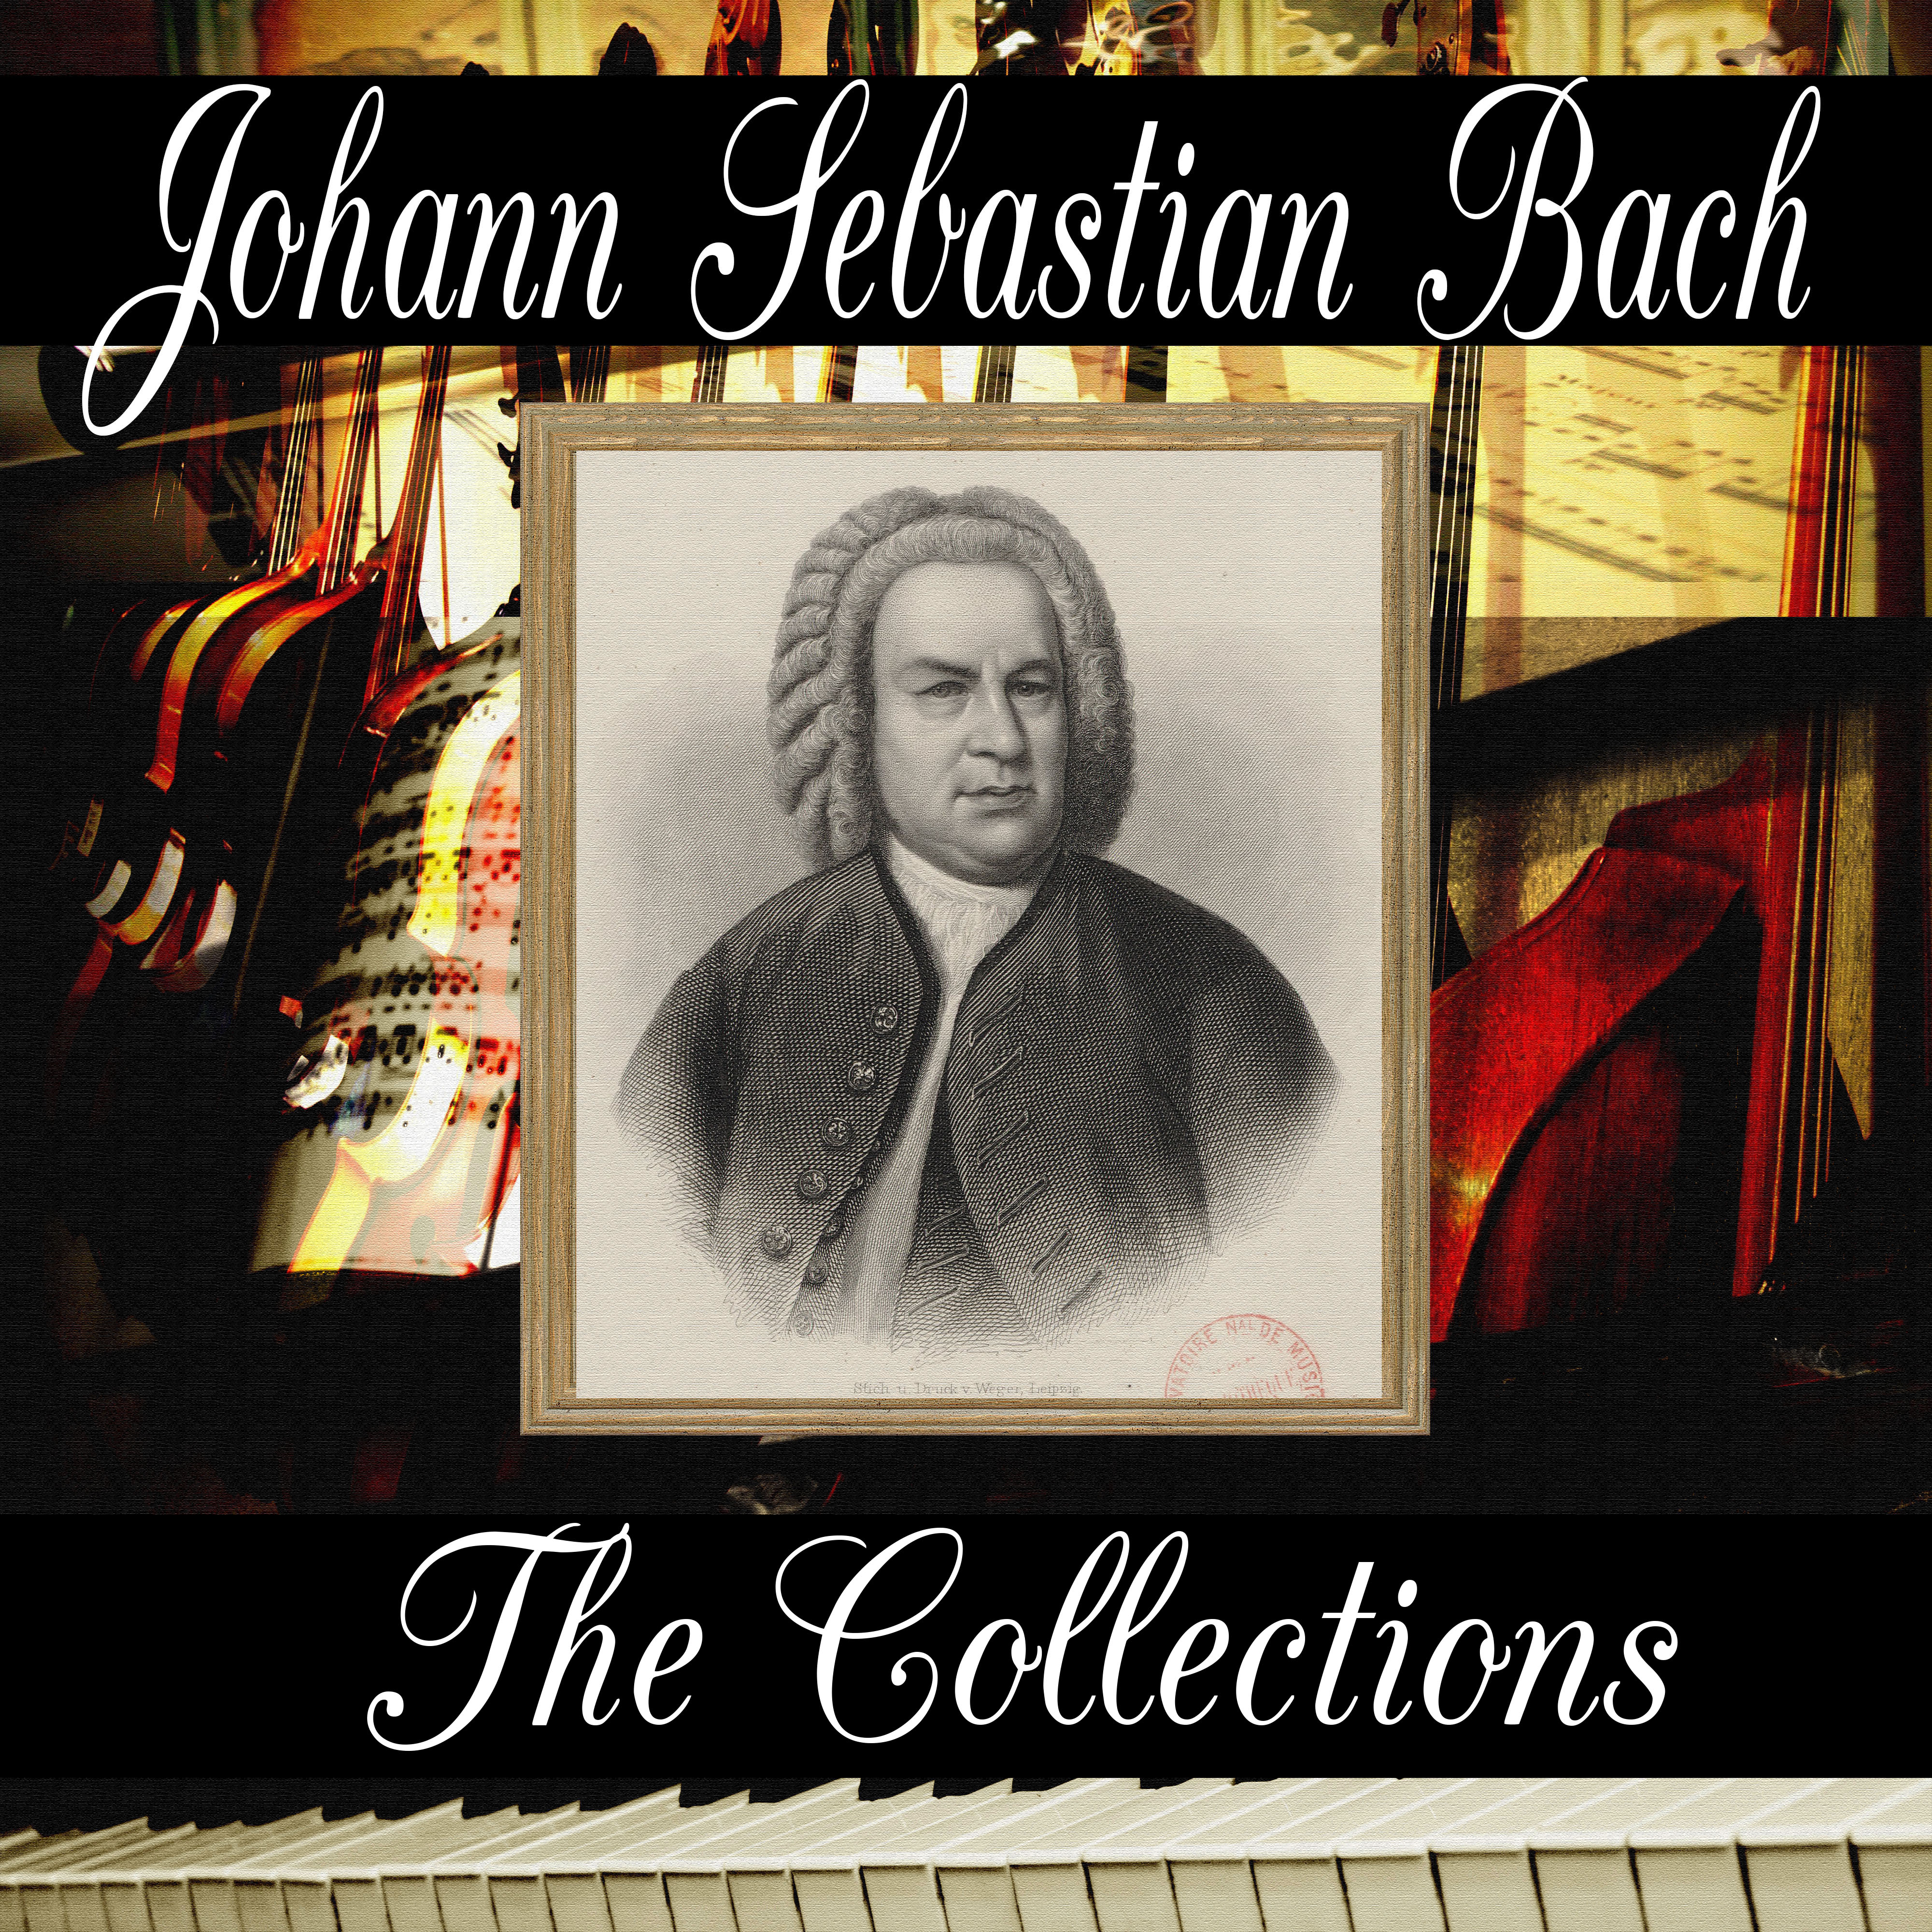 Johann Sebastian Bach: The Collection